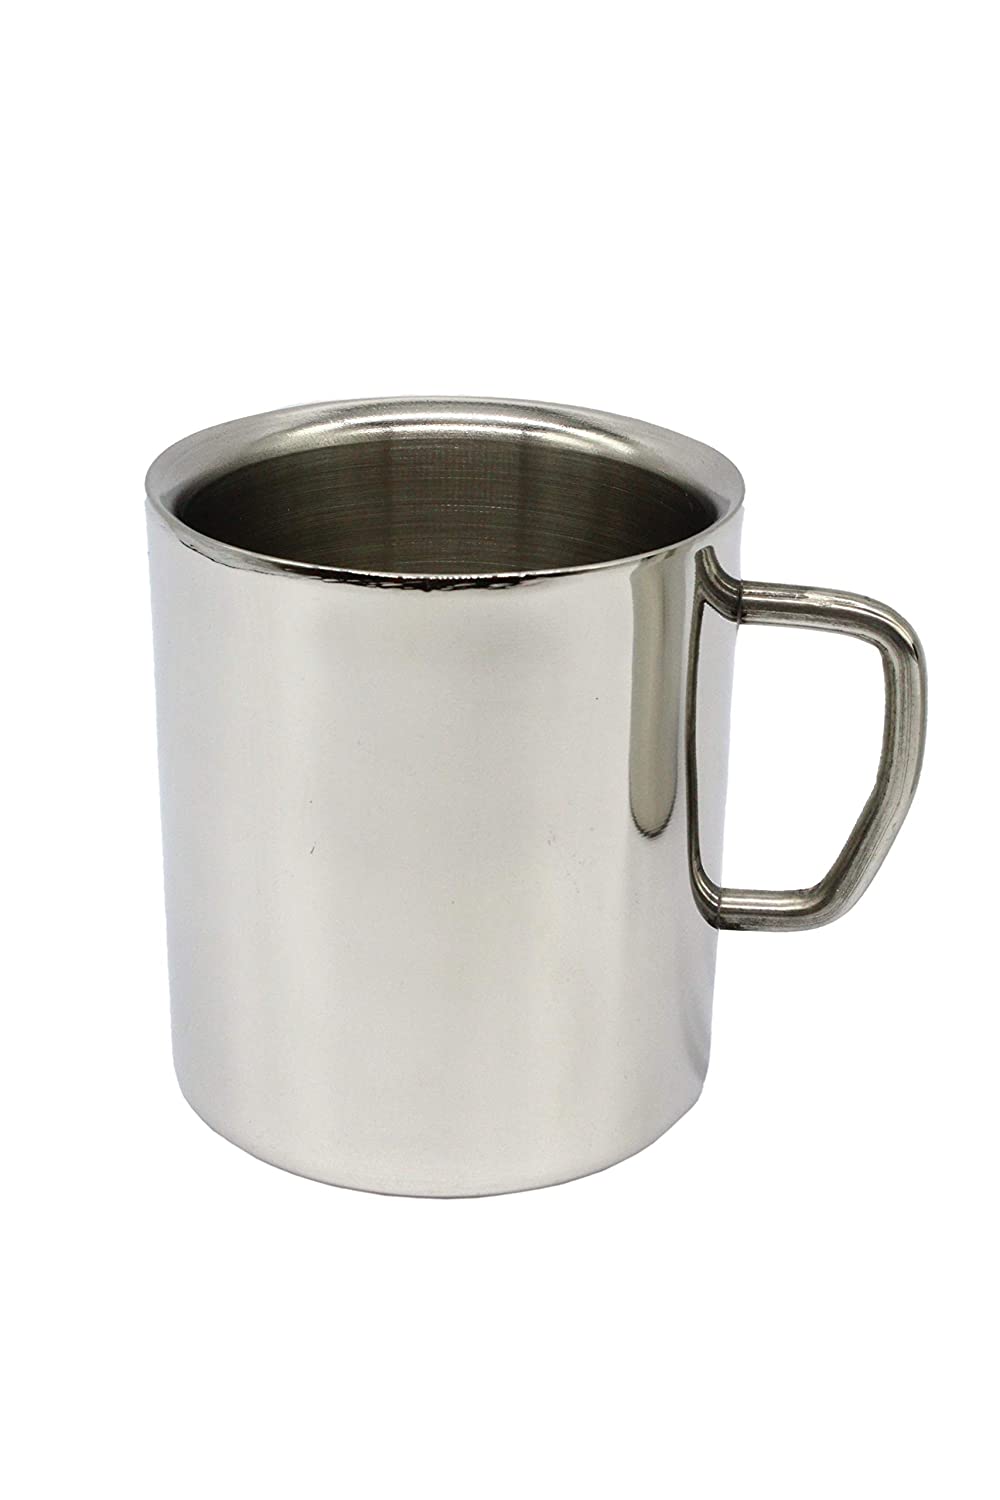 Stainless Steel Mug Set 250 ml